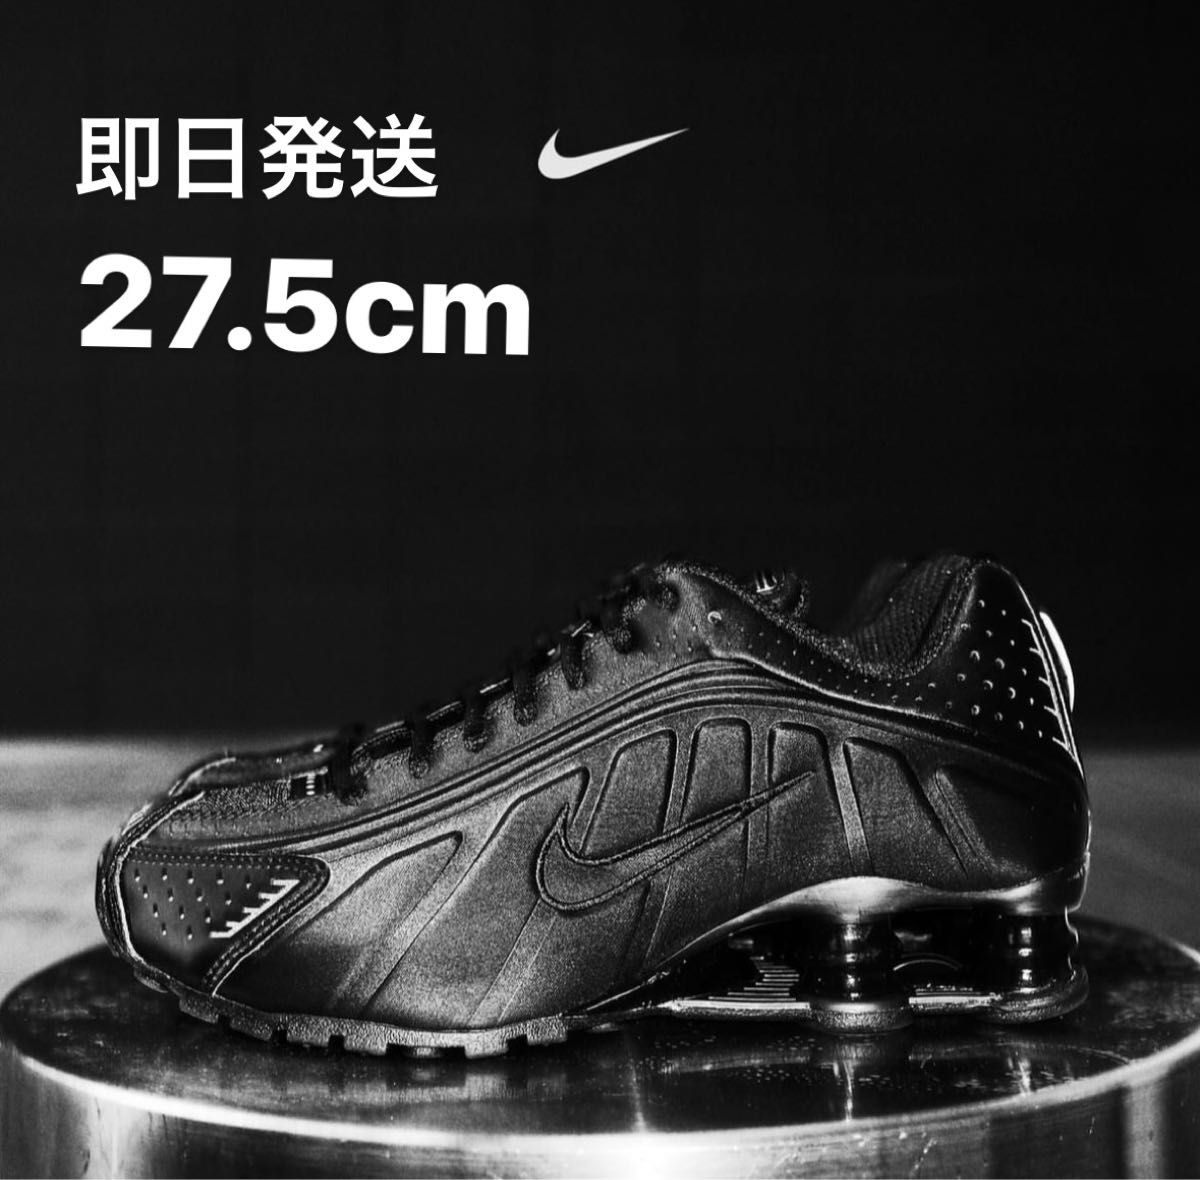 27.5cm Nike WMNS Shox R4 Black ナイキ ウィメンズ ショックス